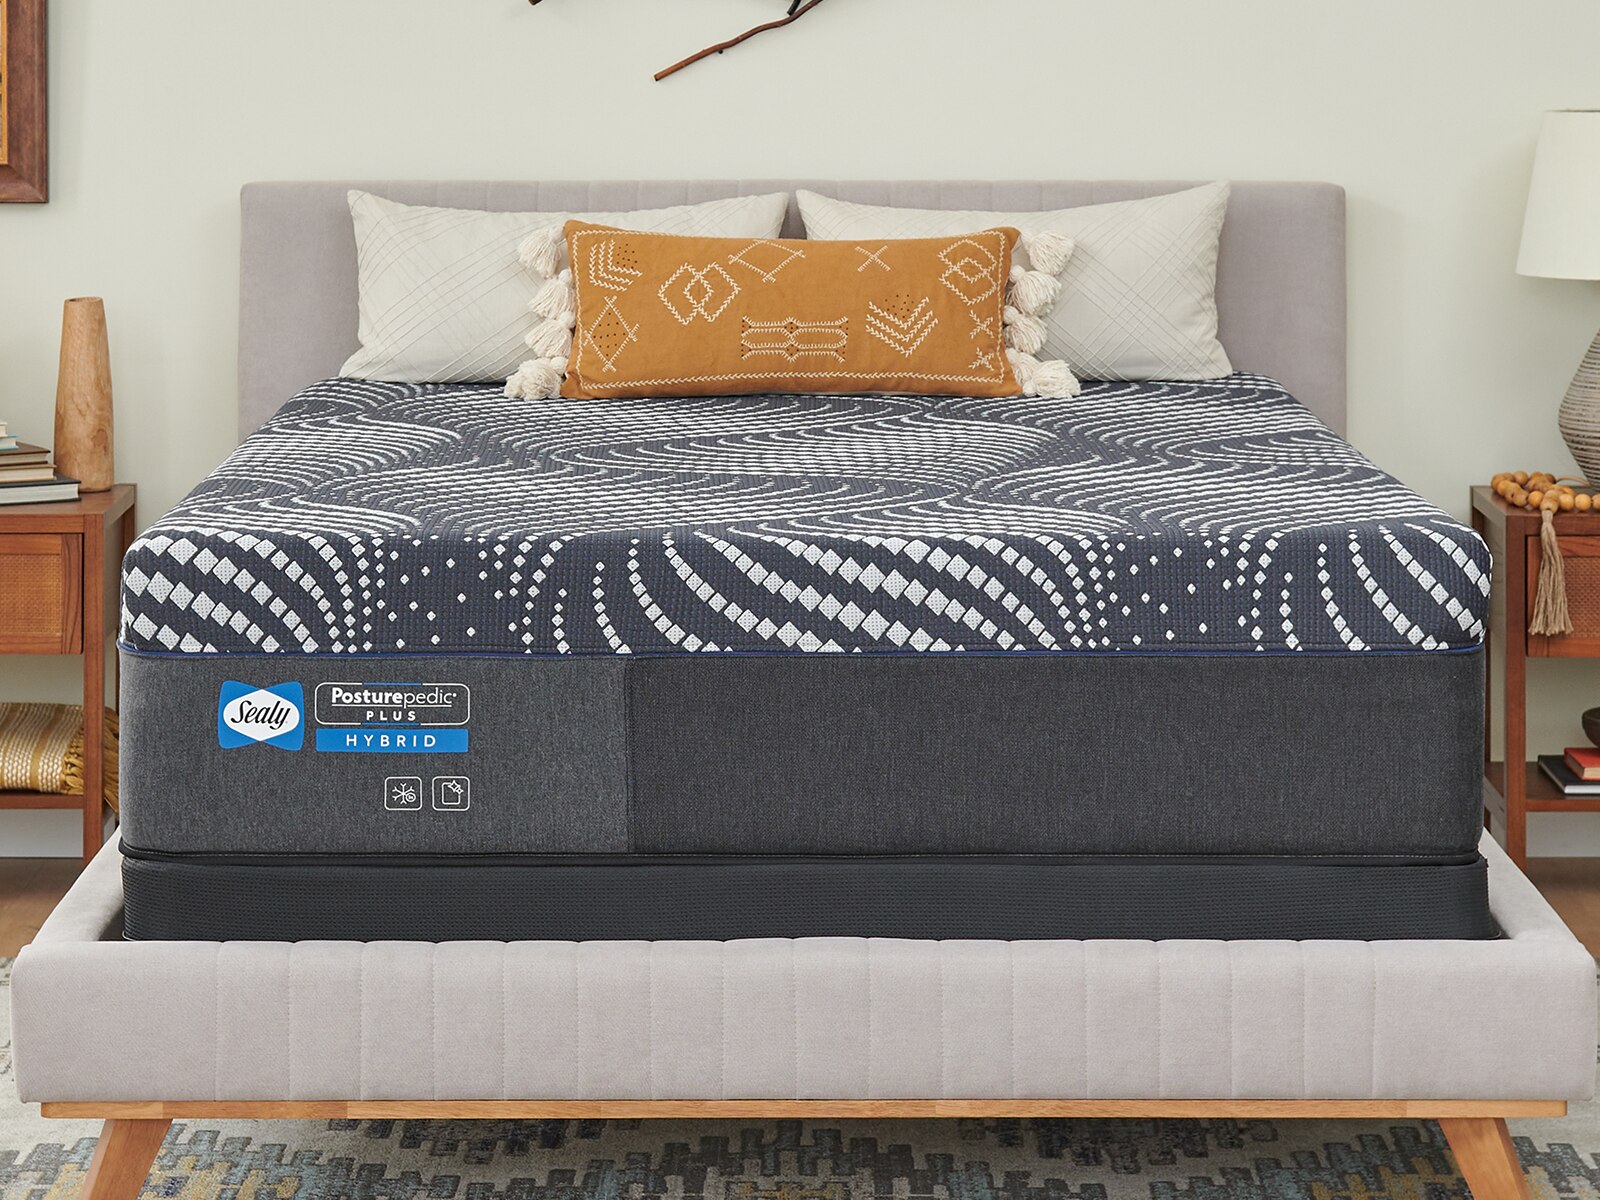 sealy mattress model 524462